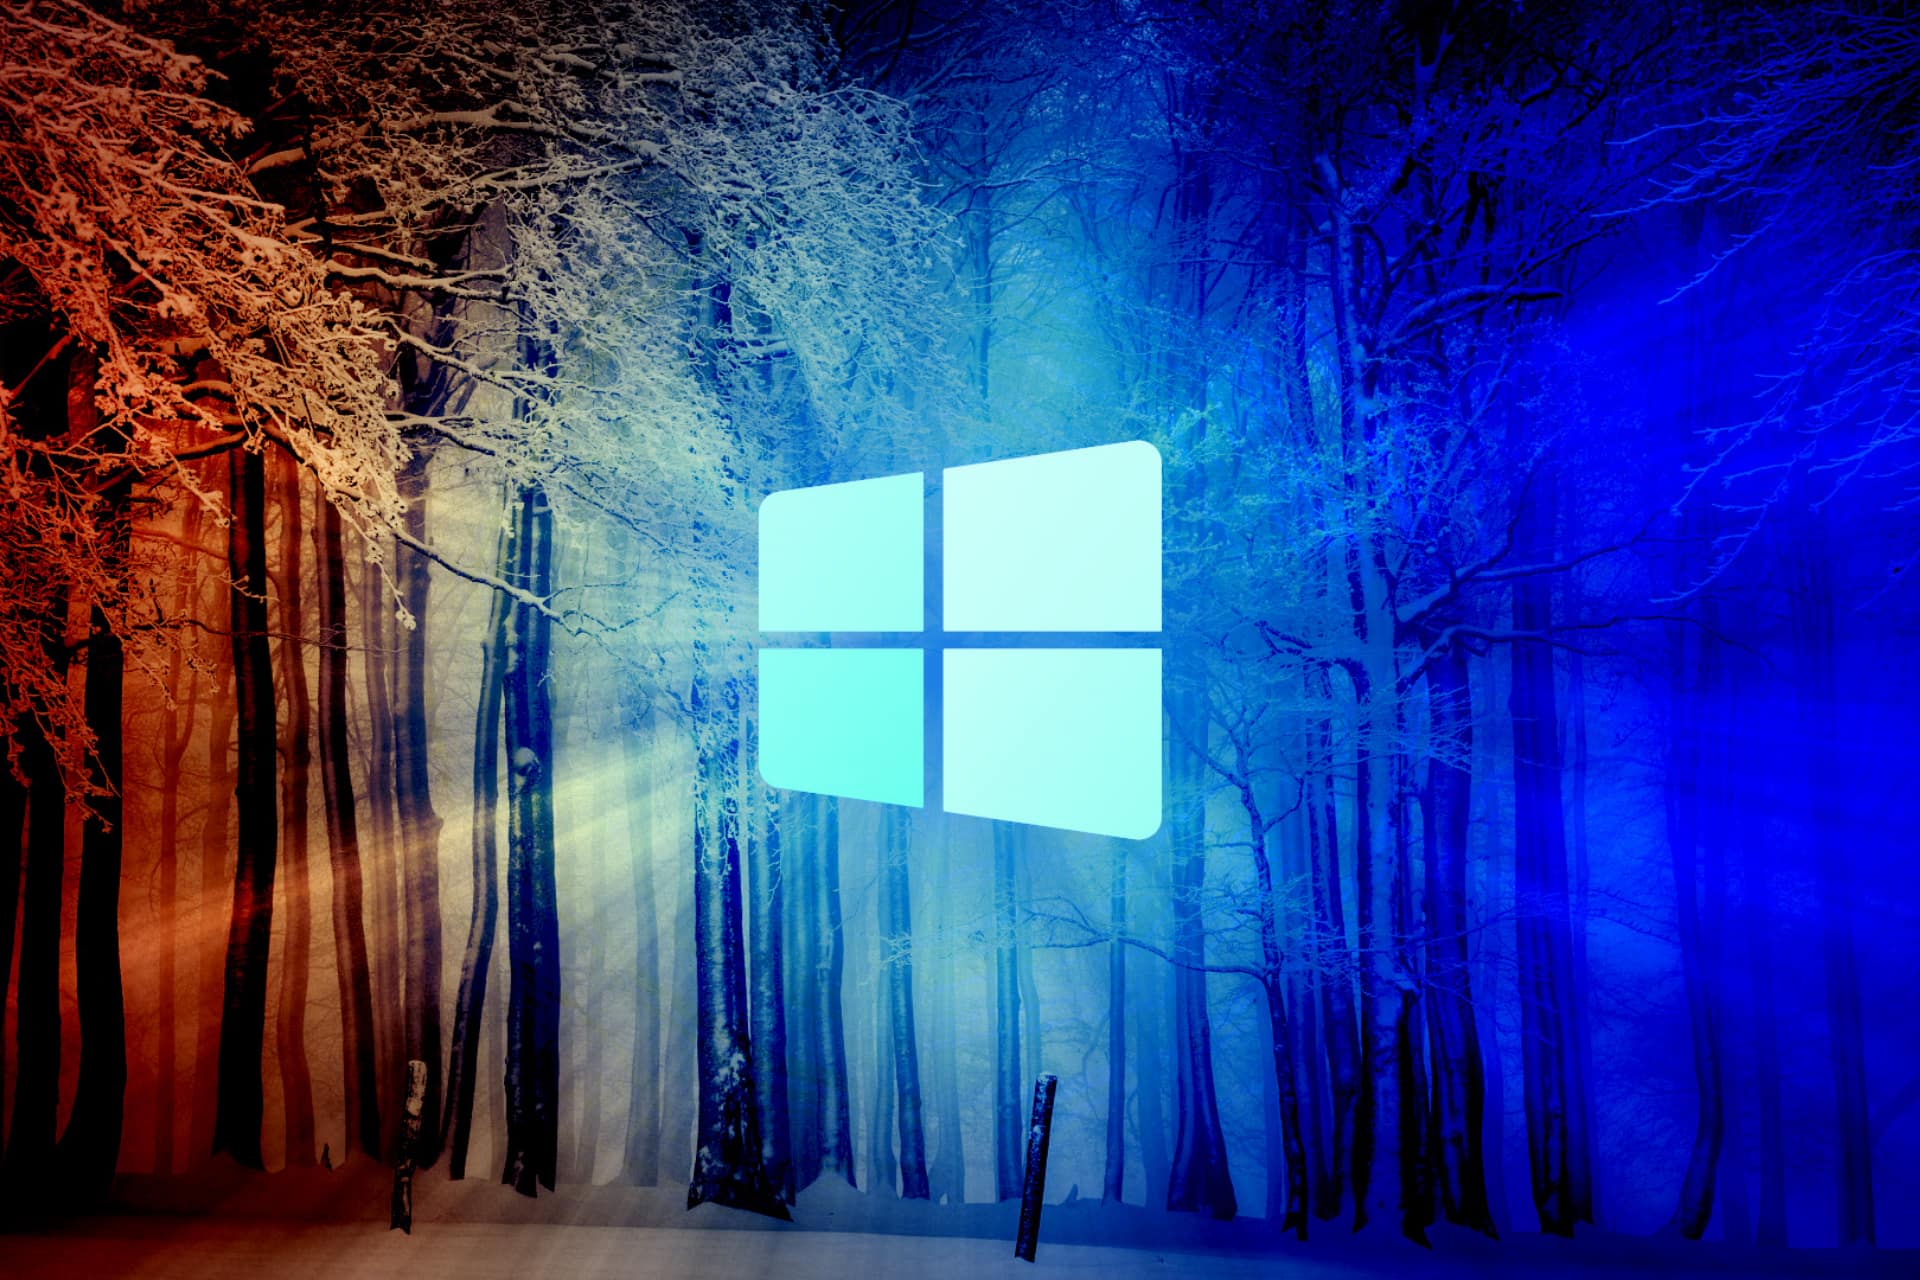 Windows 10 21H1 release